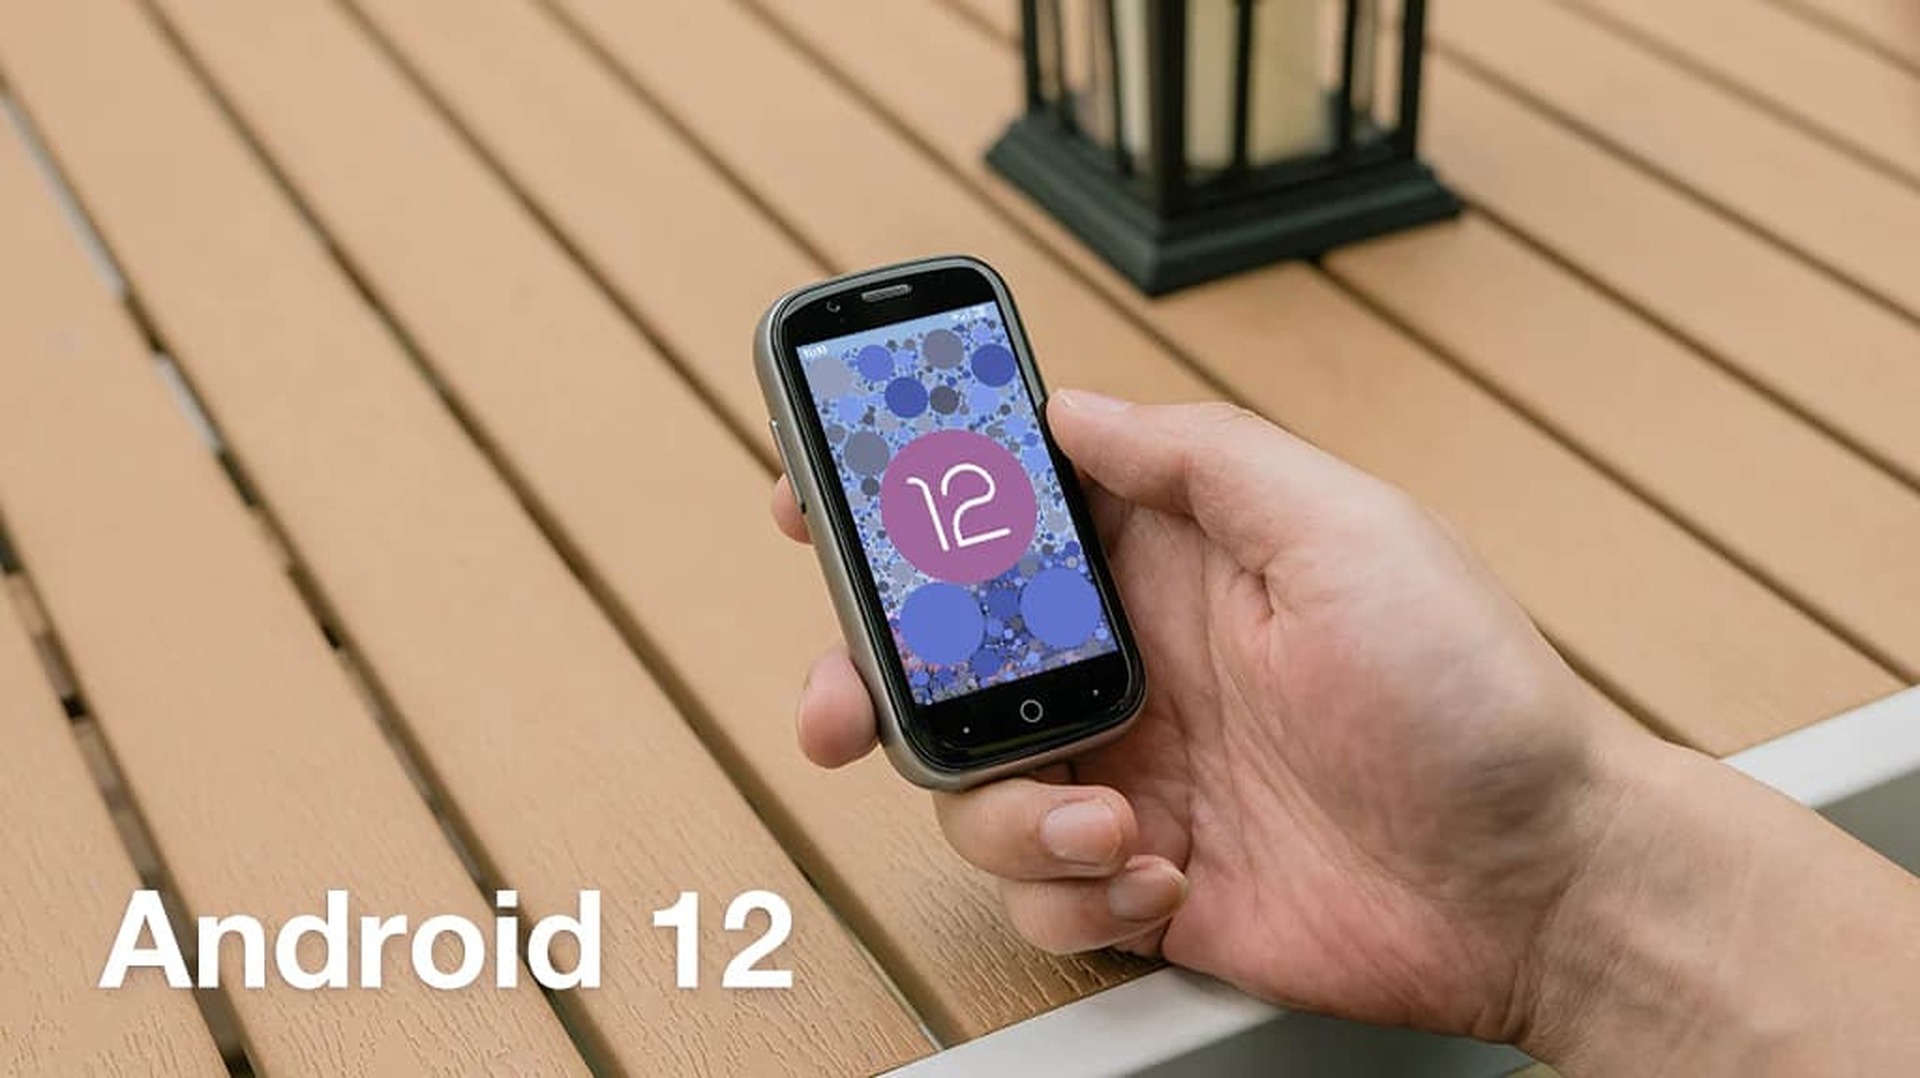 Unihertz ユニハーツ Jelly2 日本版 Android ミニスマホスマートフォン/携帯電話